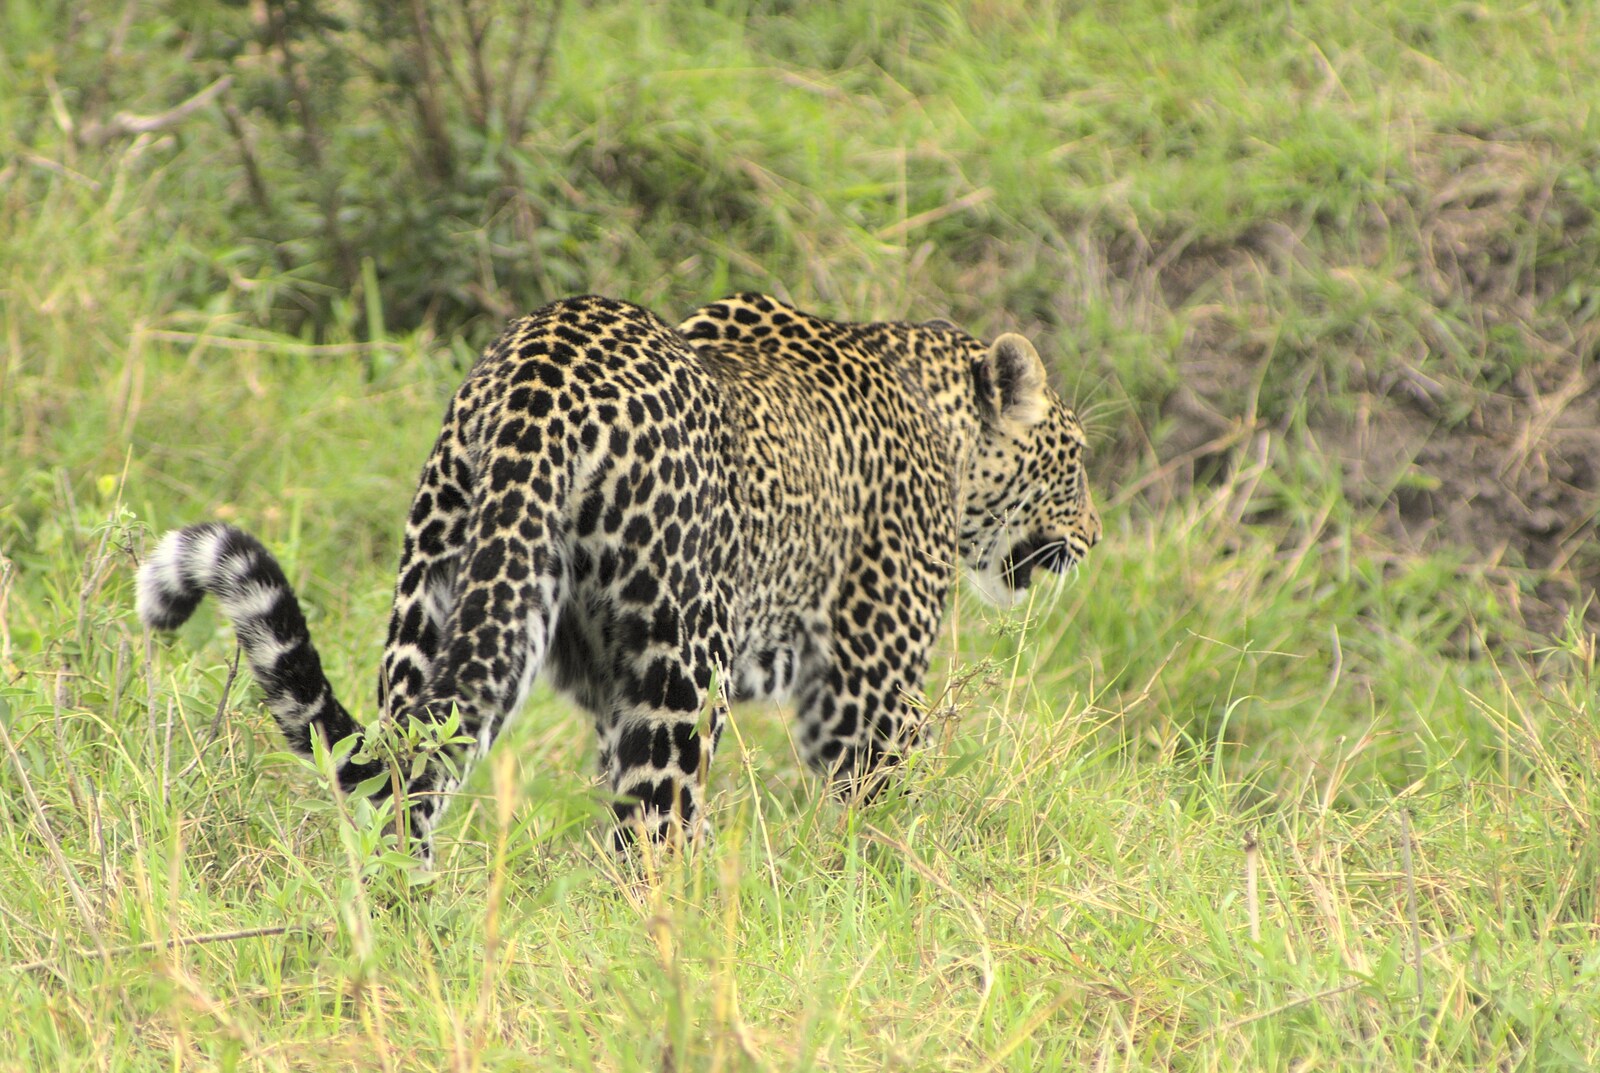 Maasai Mara Safari and a Maasai Village, Ololaimutia, Kenya - 5th November 2010: Leopard in action